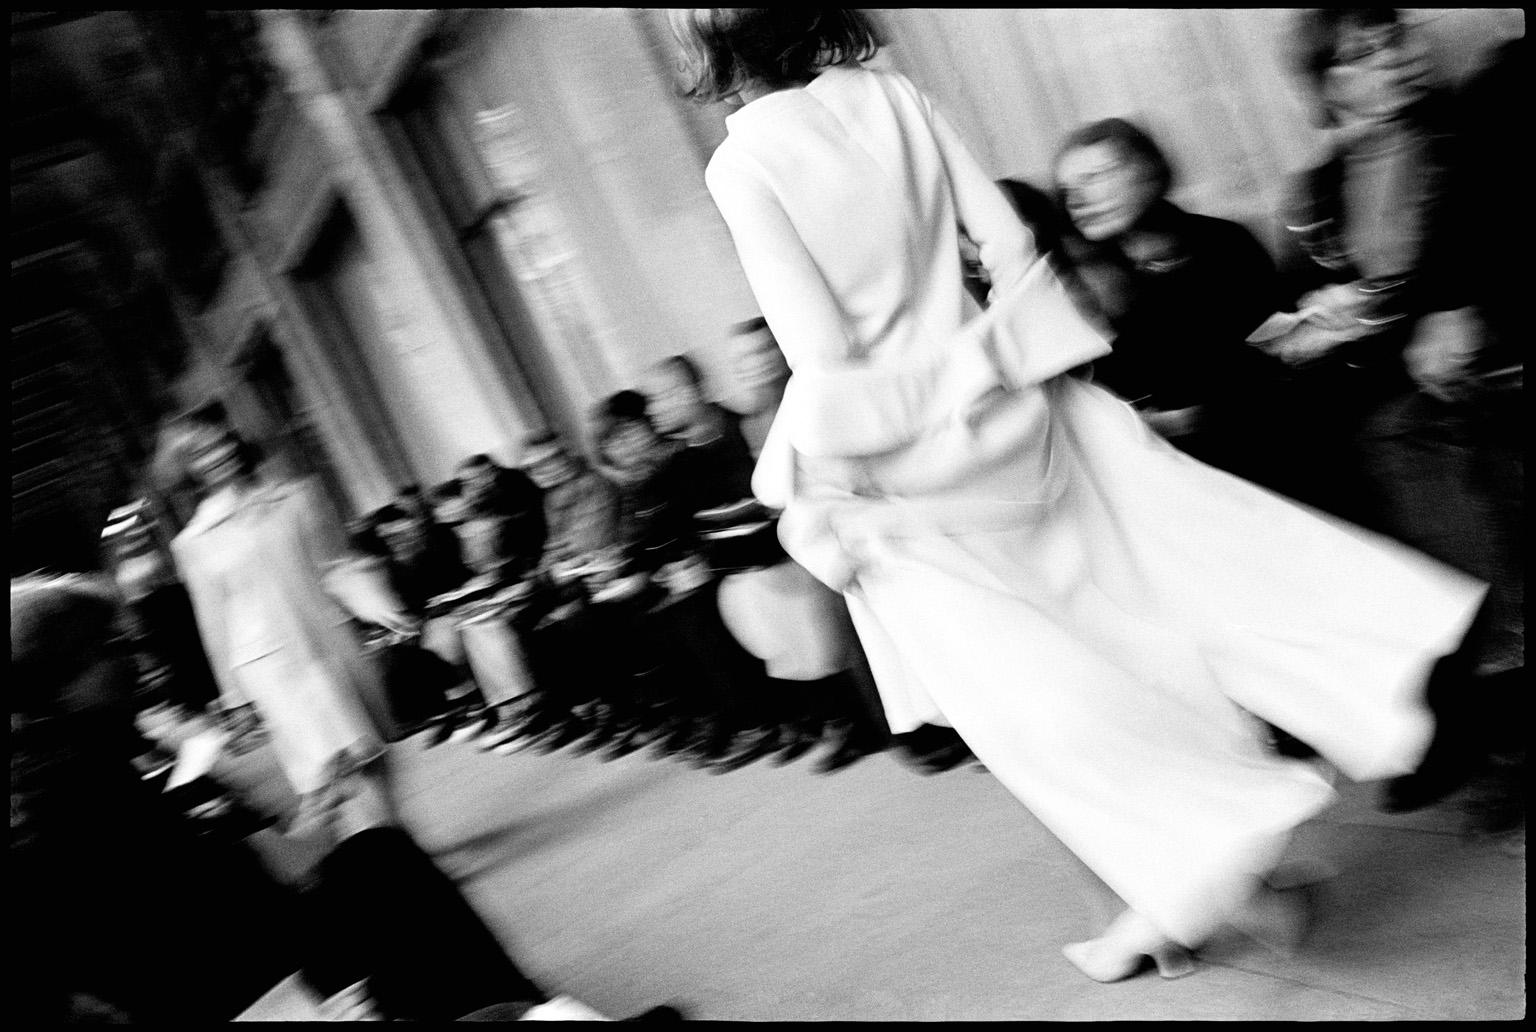 Jean-Luc Fievet Figurative Photograph - Jerome L' Huillier - Palais Royal - Black and White Photograph of Fashion Show